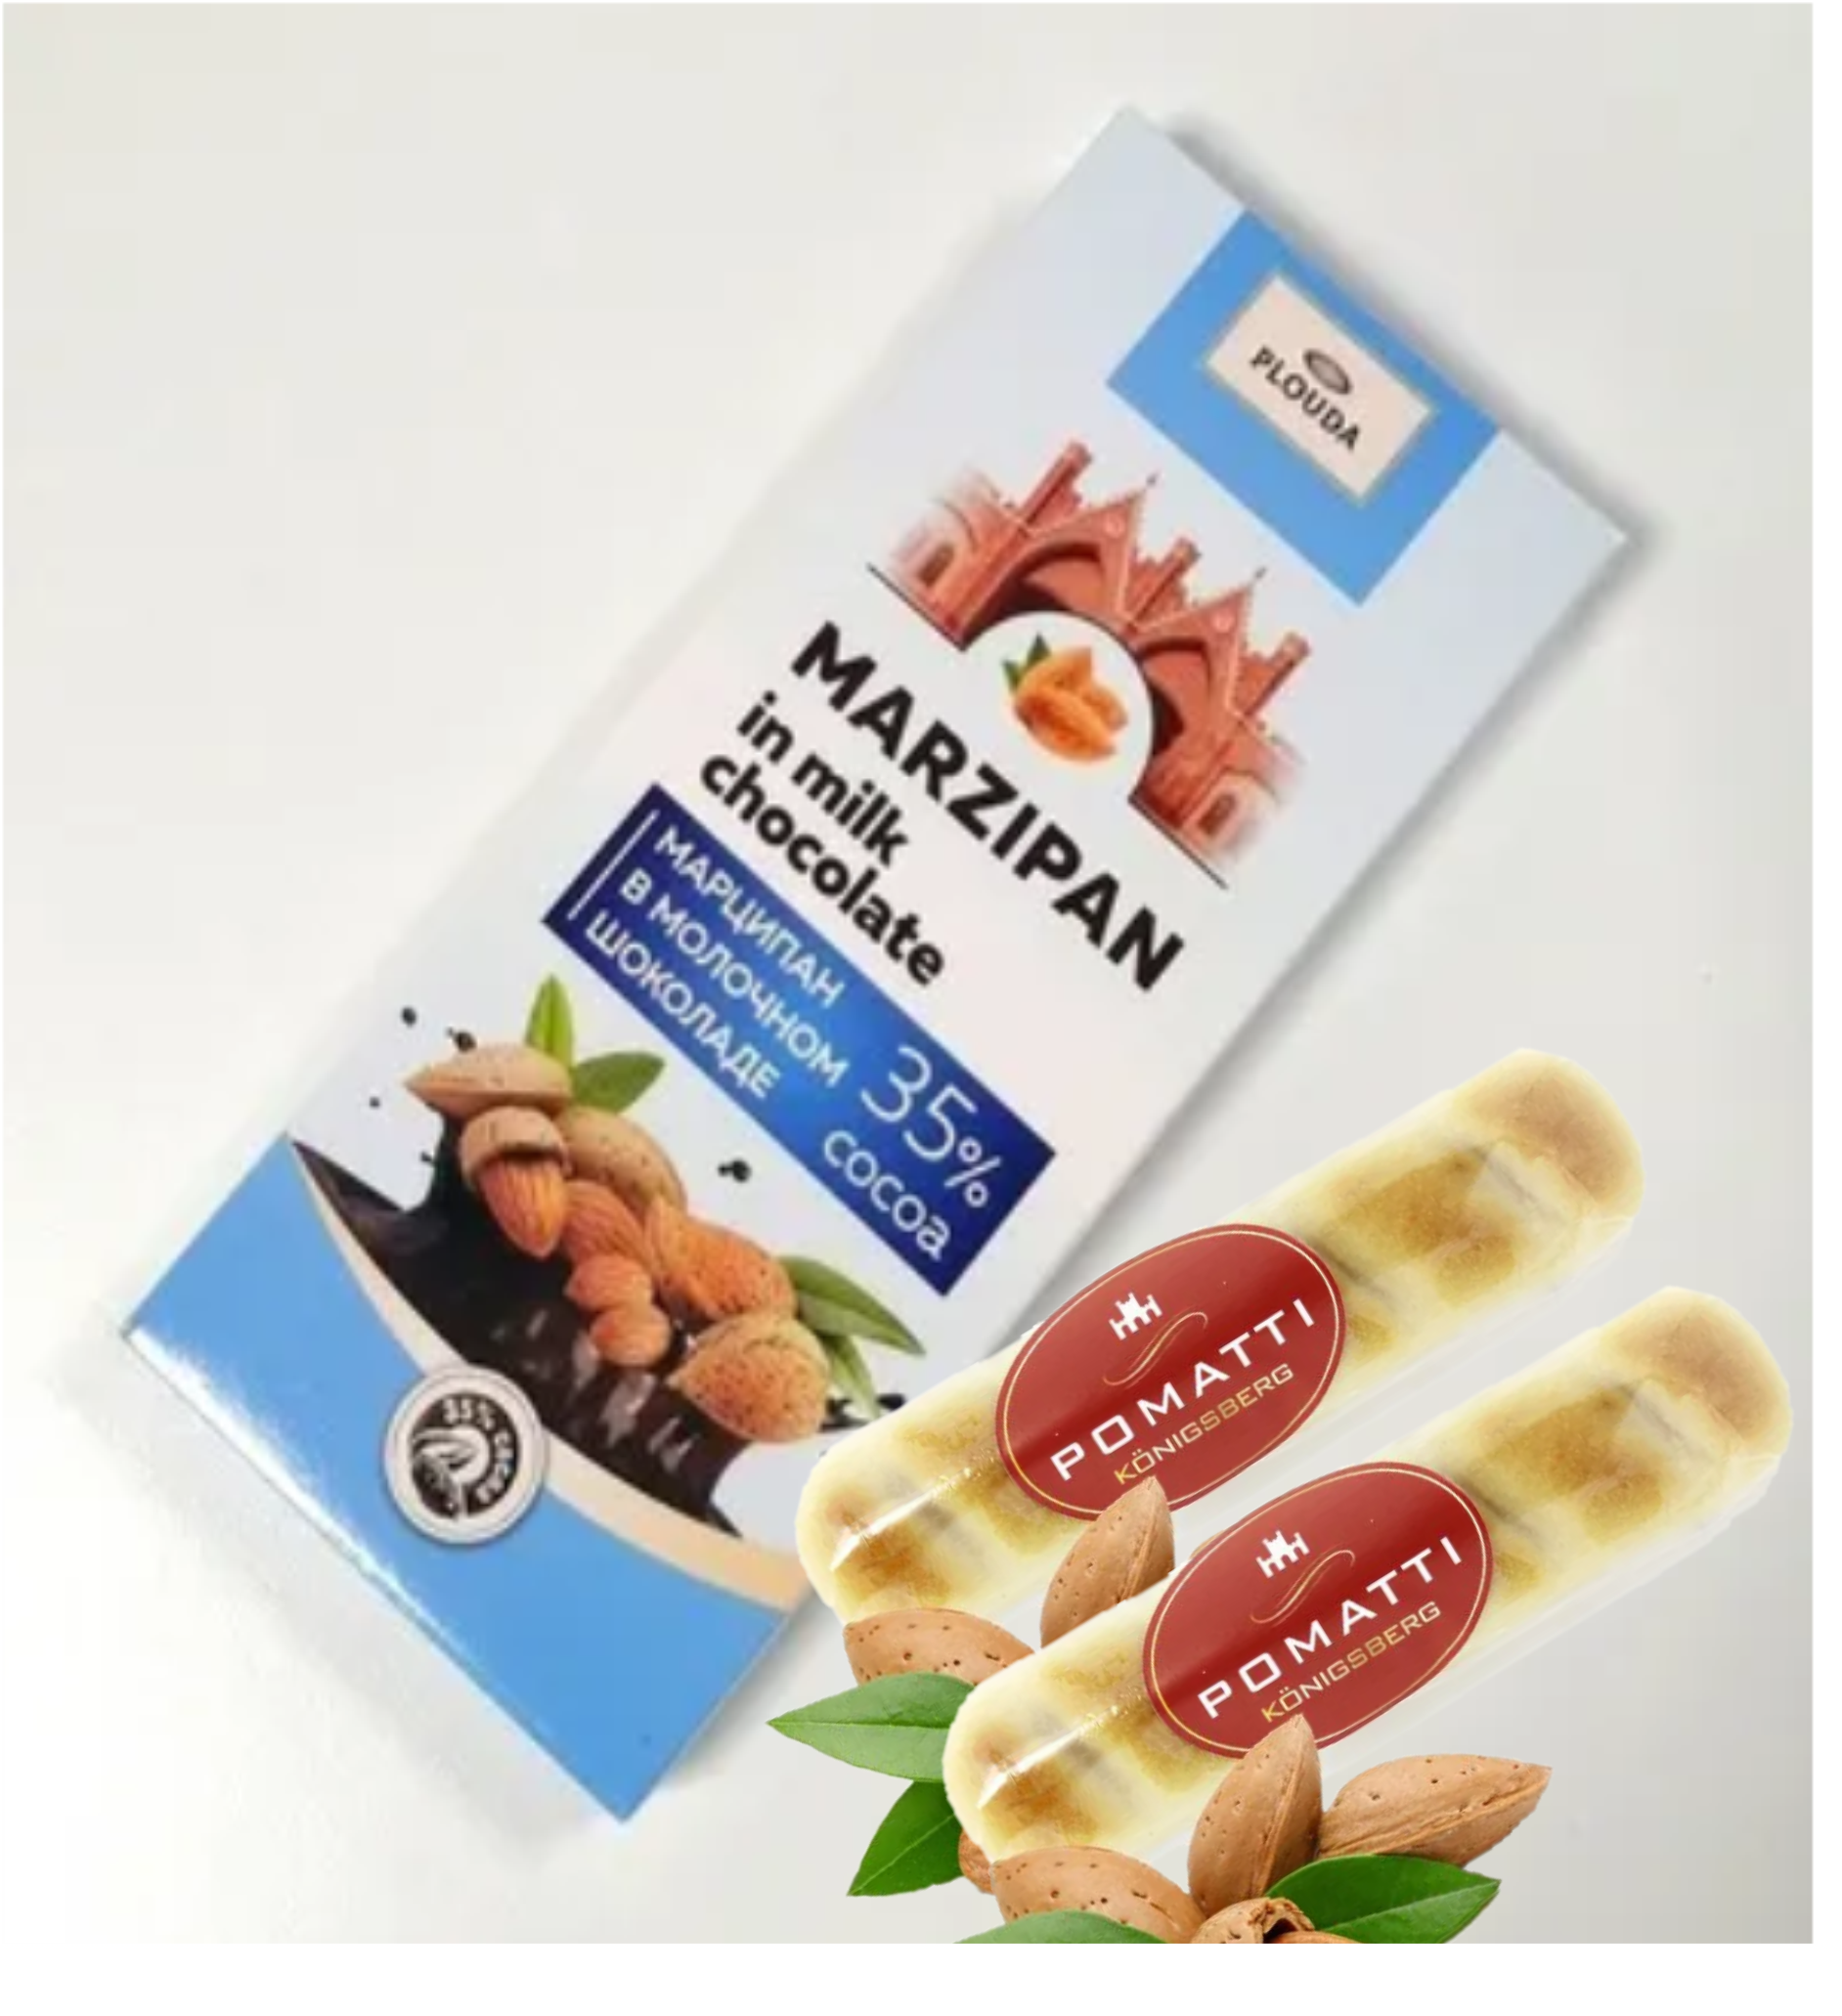 Набор: Марципановые конфеты в молочном шоколаде Pomatti, 85гр + 2 батончика на 35 гр